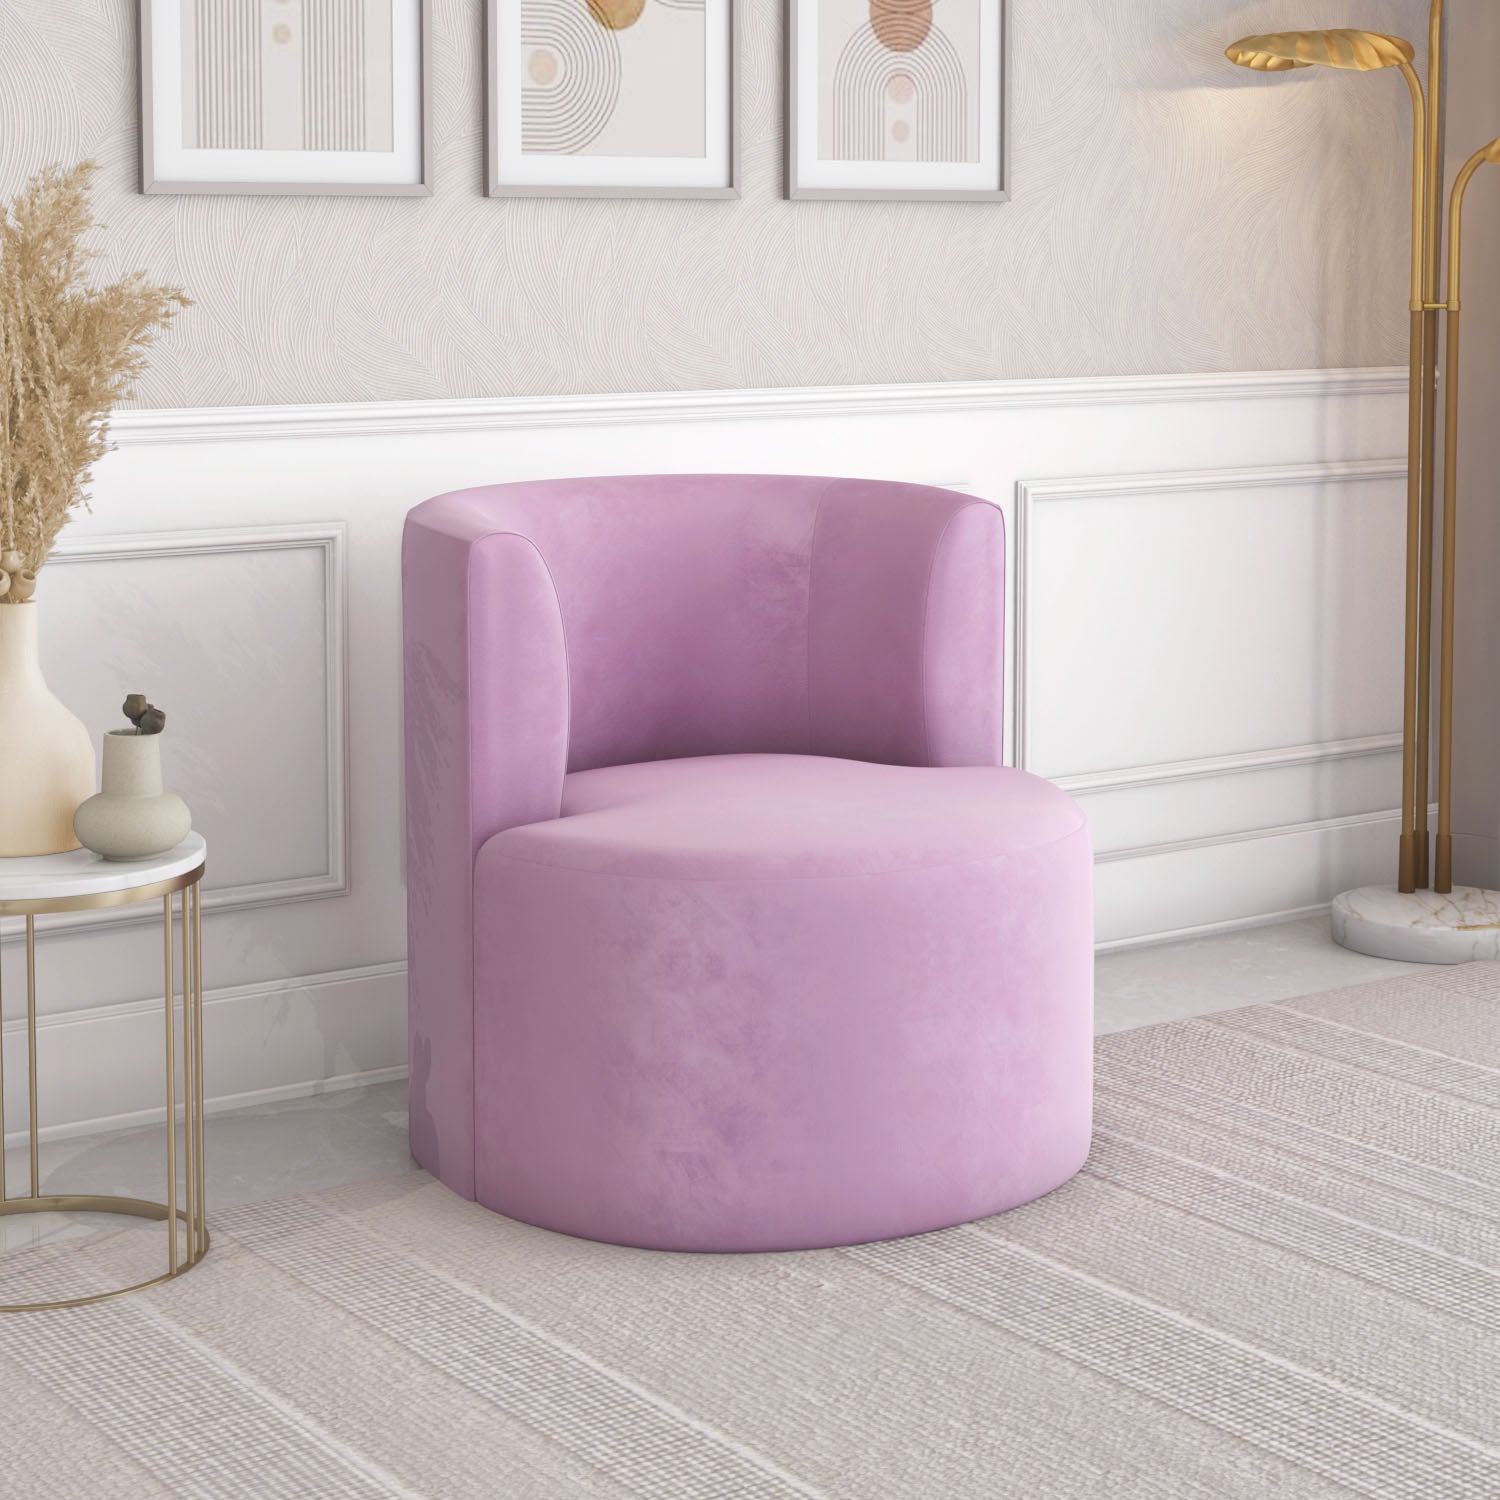 Arias by Lara Dutta Lorenza Fabric Upholstered Swivel Arm Chair (Onion Pink)